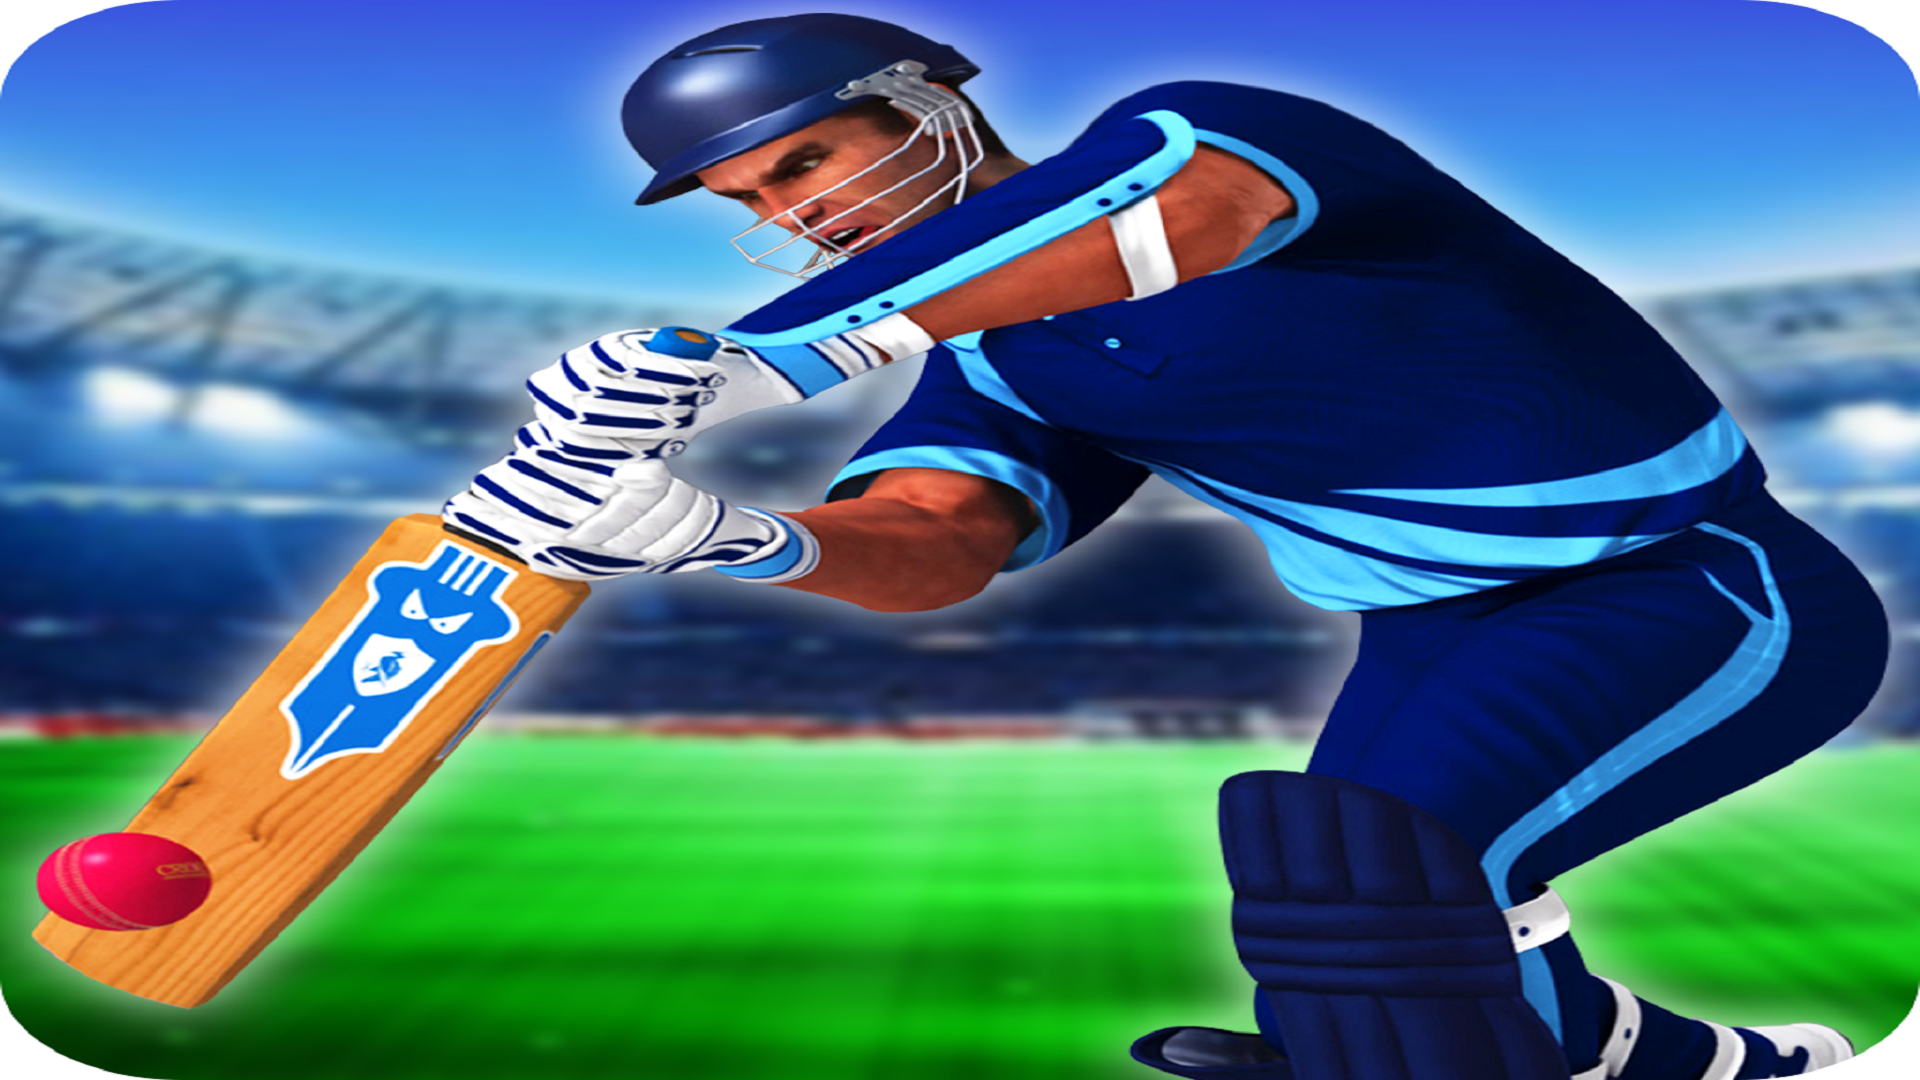 T20 World Cup Cricket Games screenshot game